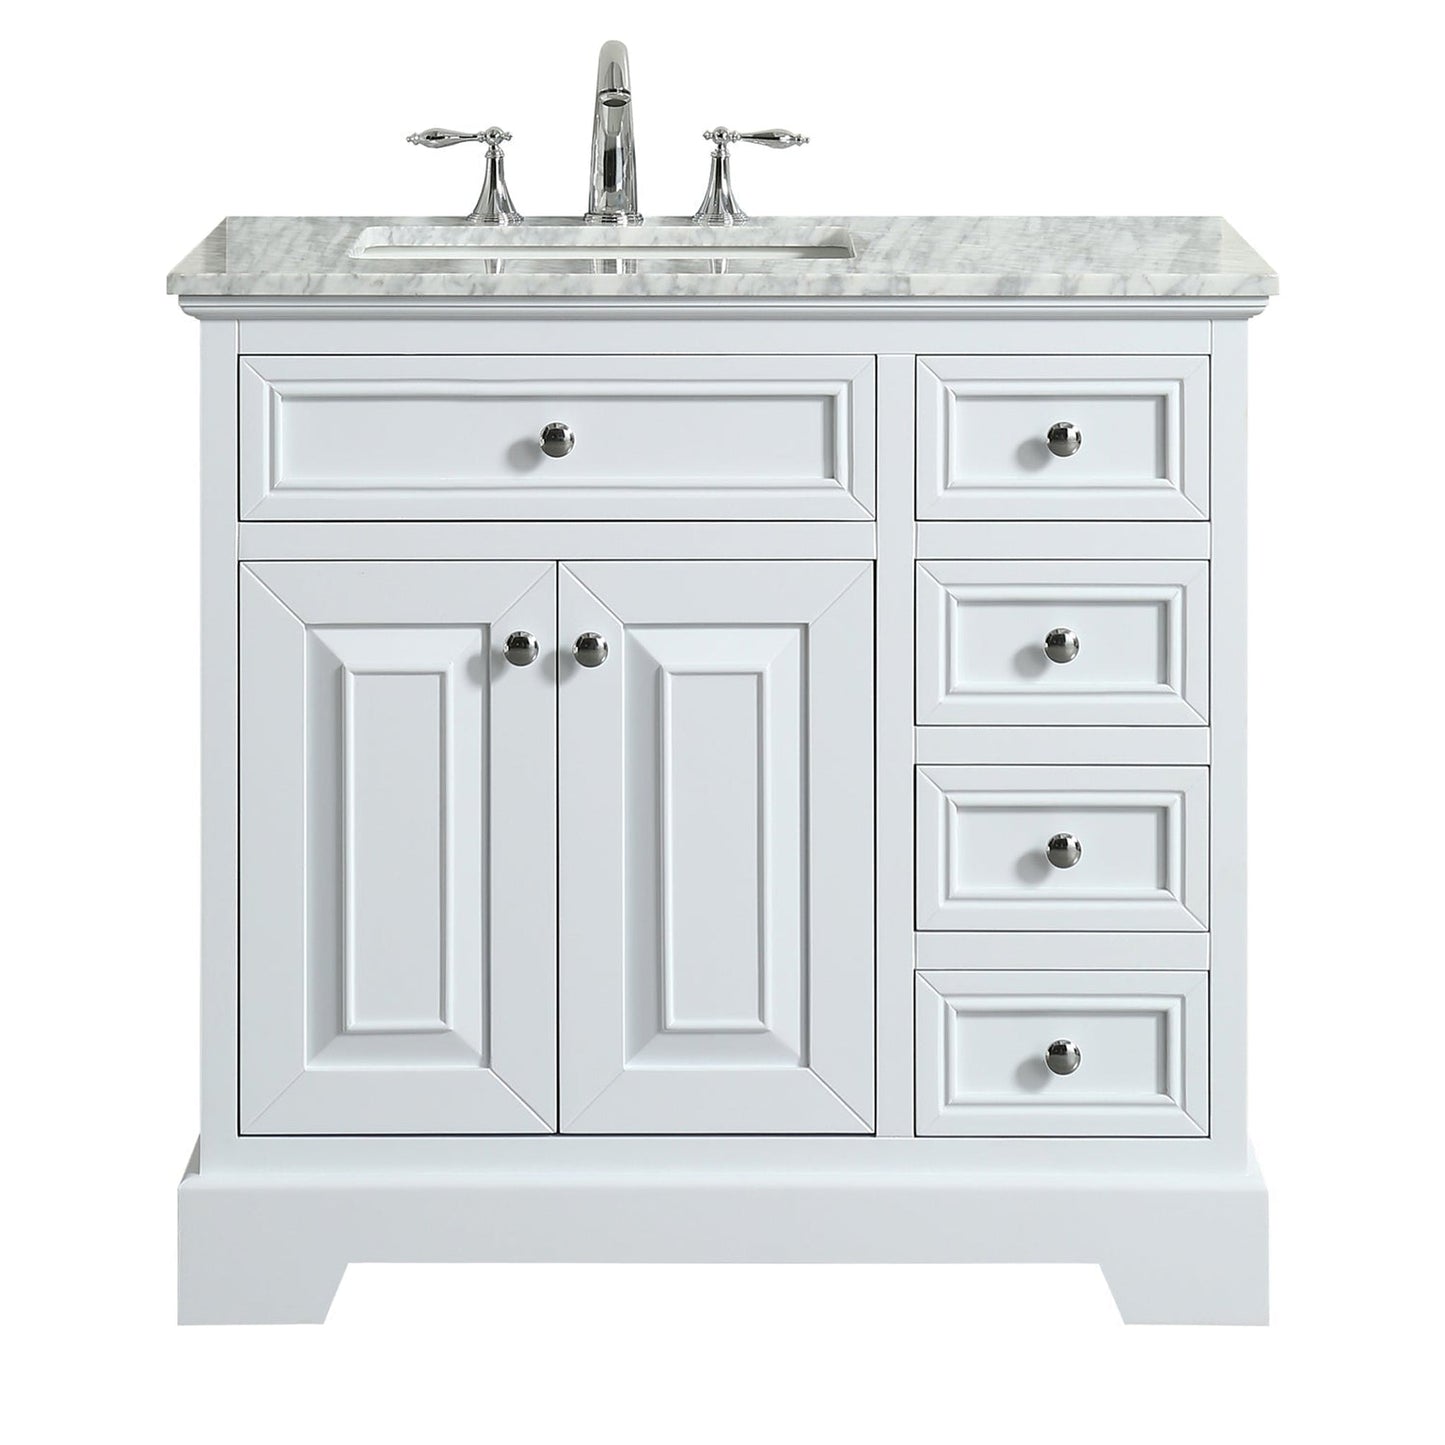 Eviva Monroe 36" x 35" White Bathroom Vanity With White Carrara Marble Countertop and Single Undermount Sink